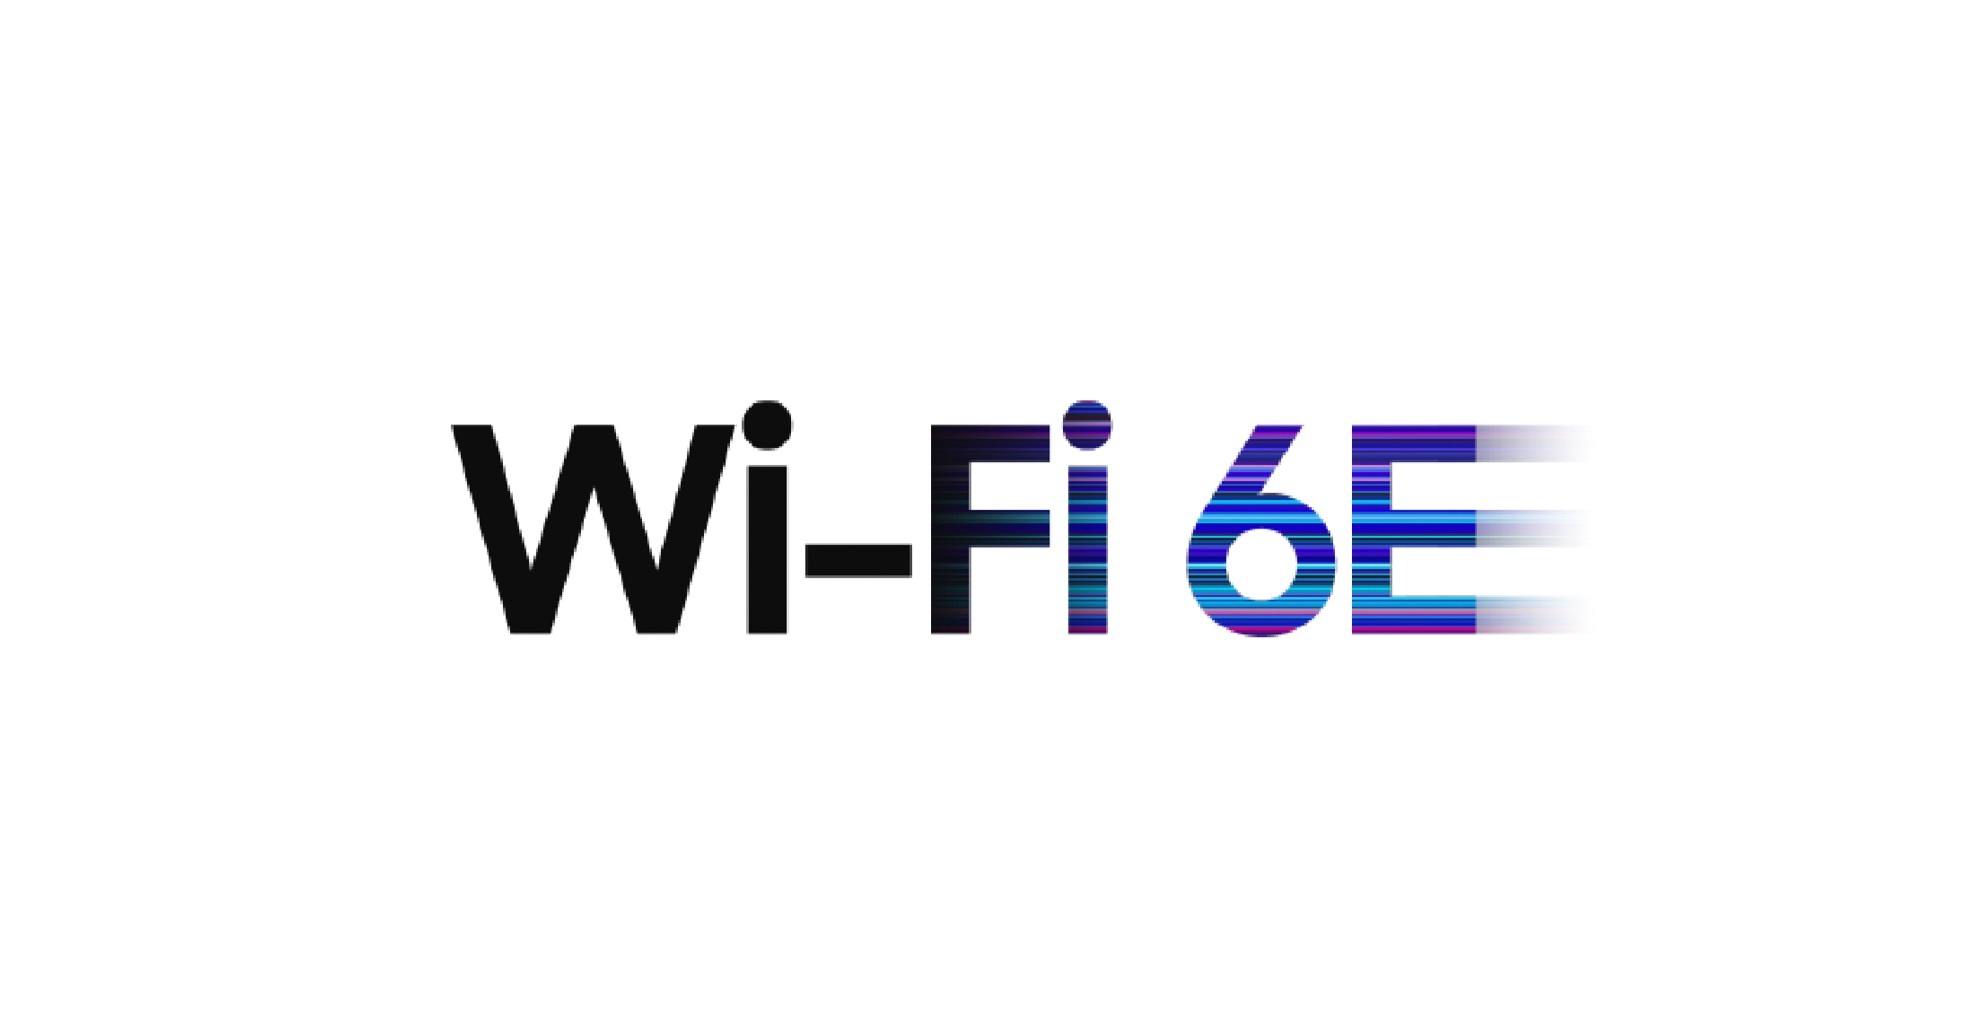 Text on image says 'Wi-Fi 6E'